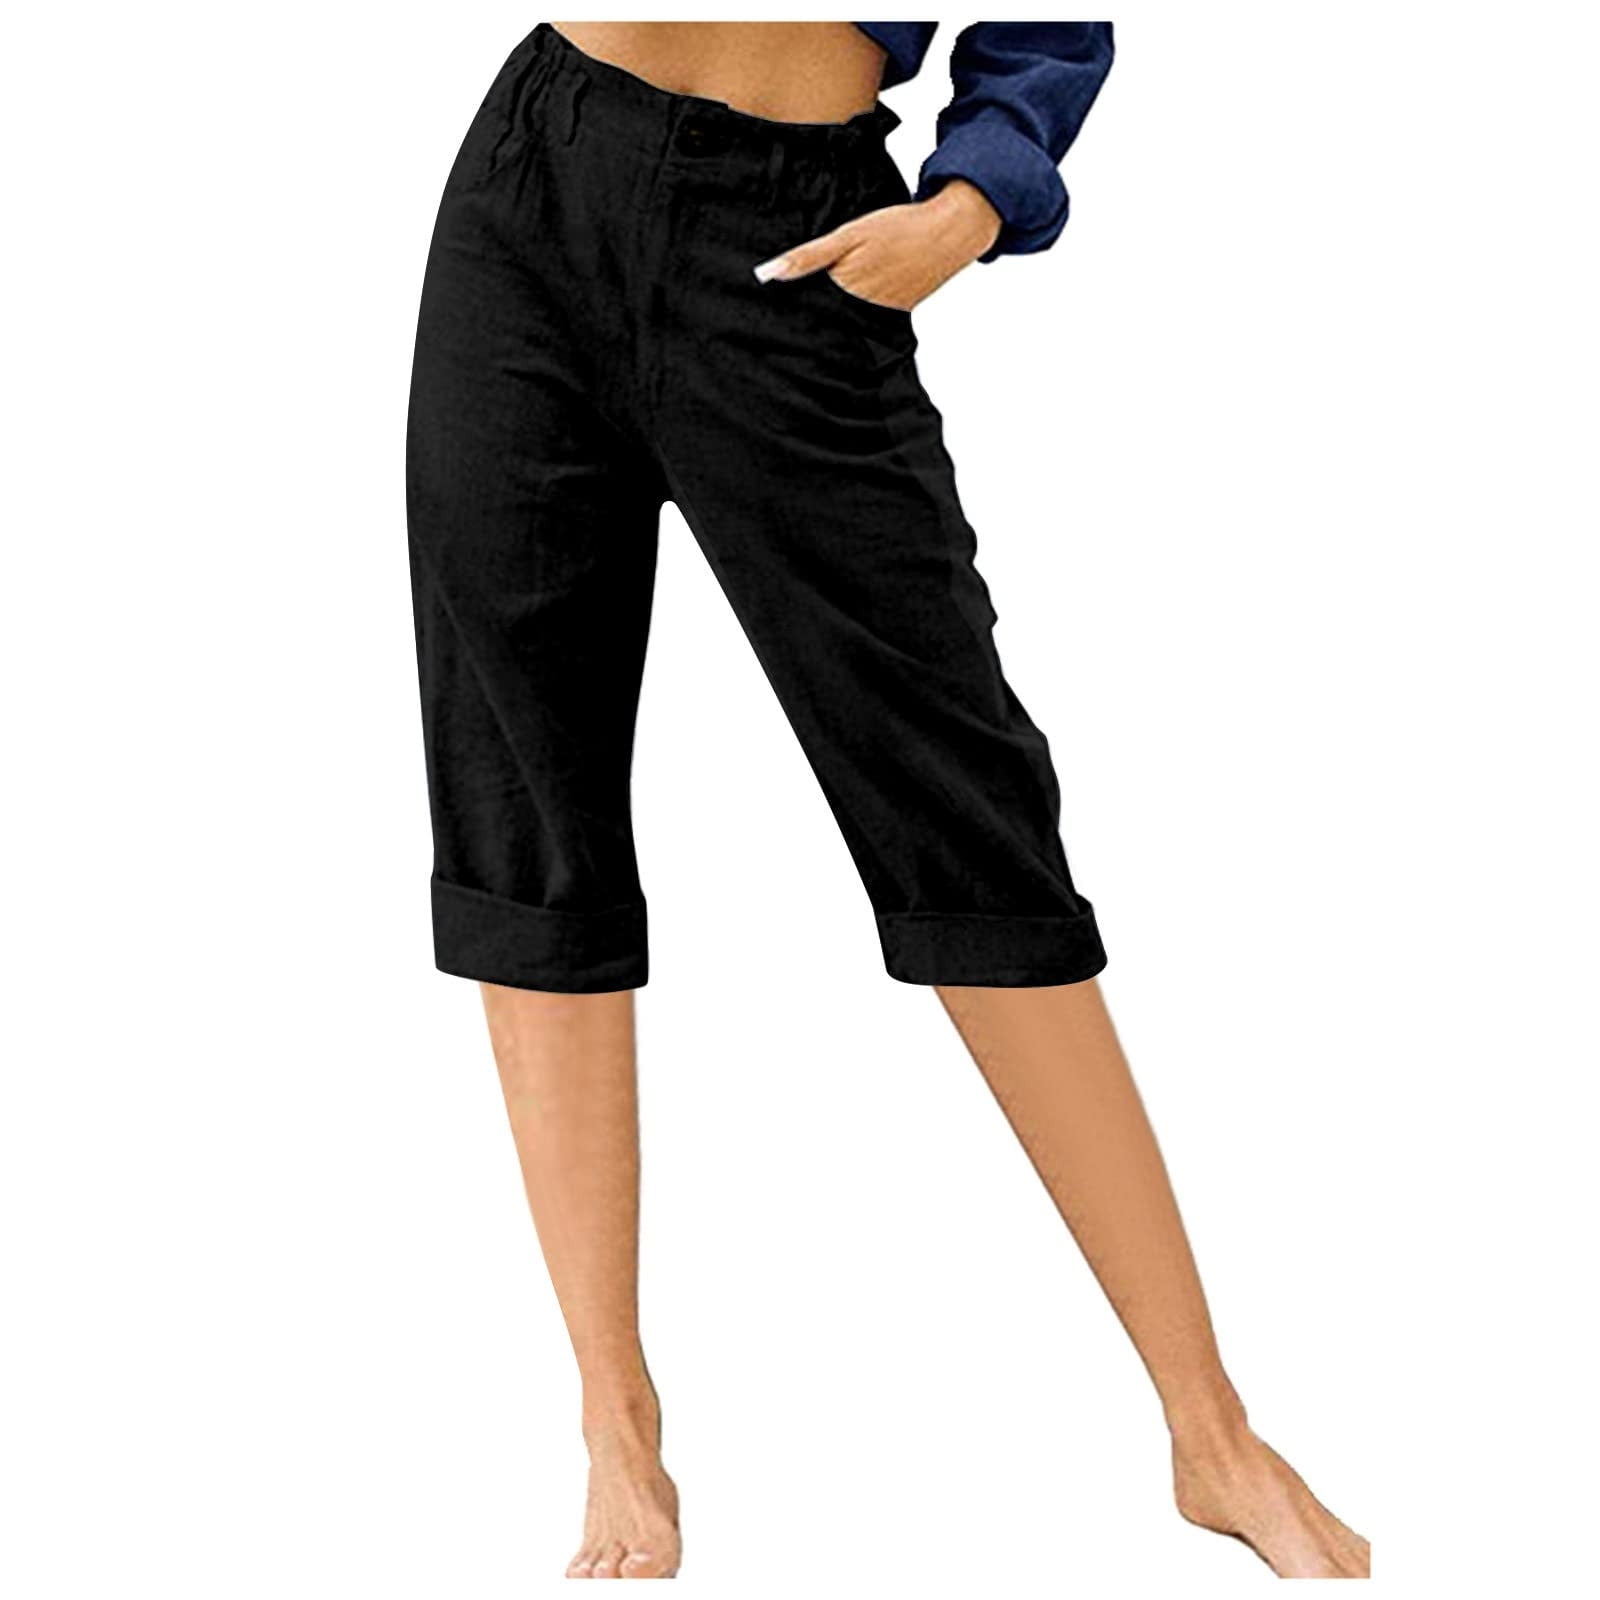 KATIES - Womens Pants - Black All Season Capri - Cropped - Slim